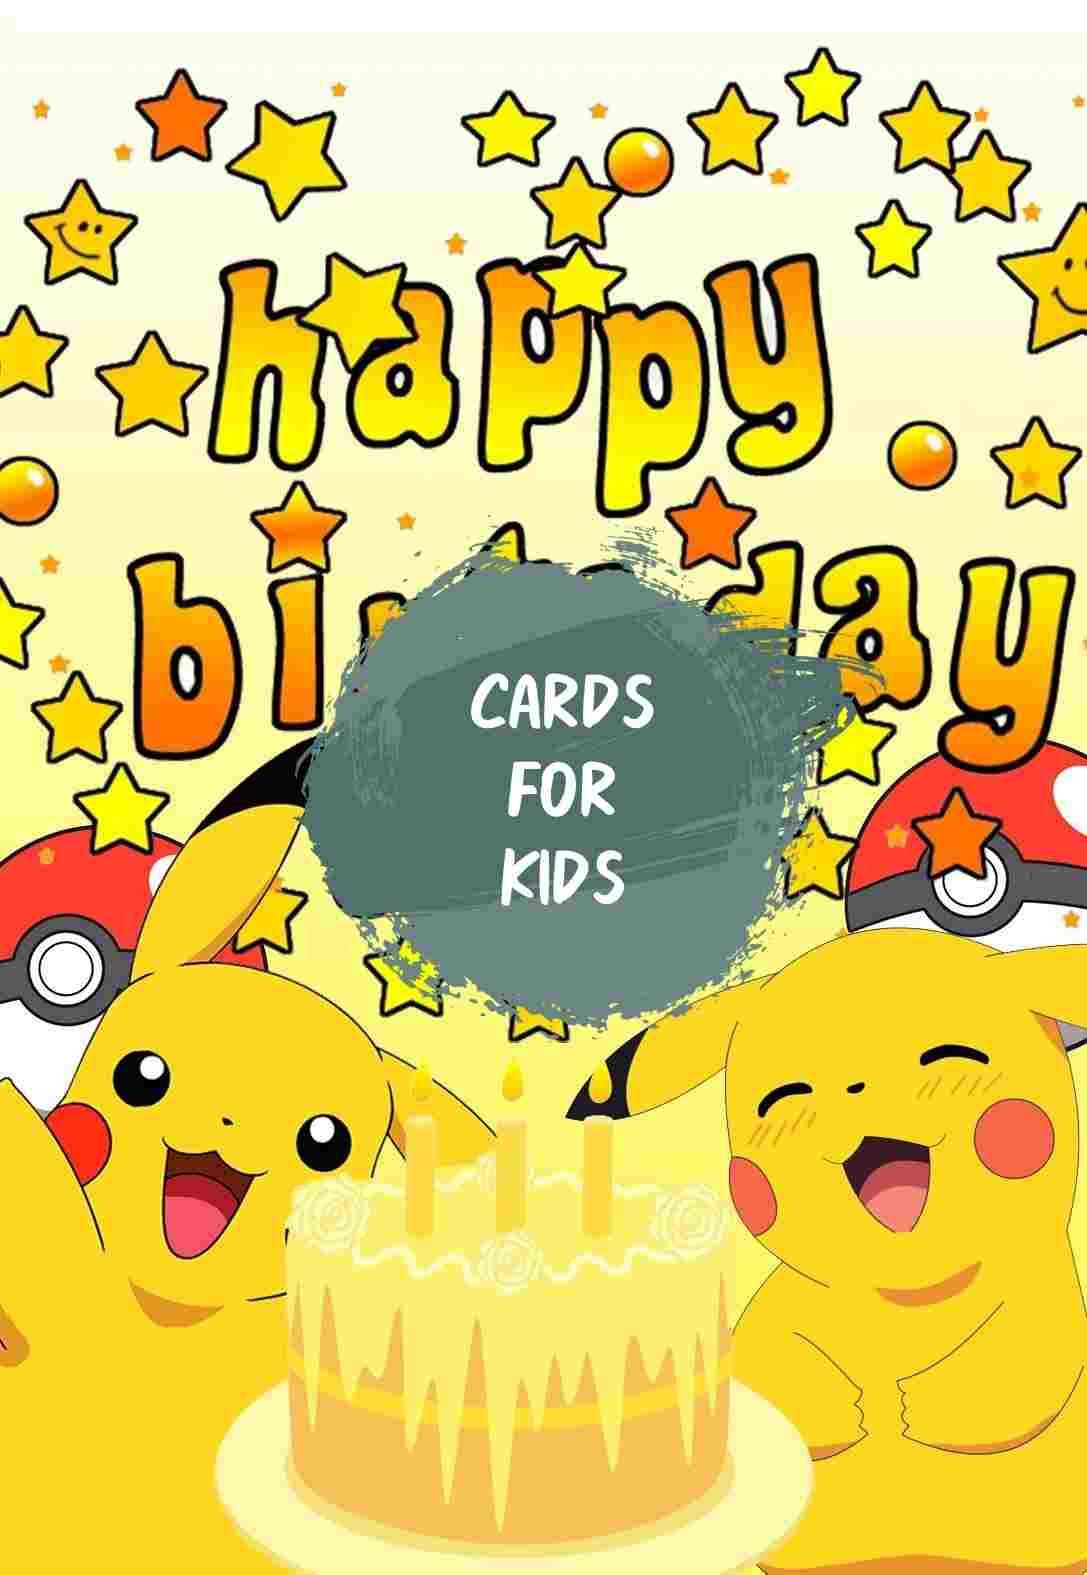 1000's of Premium Printable Birthday Cards (free)